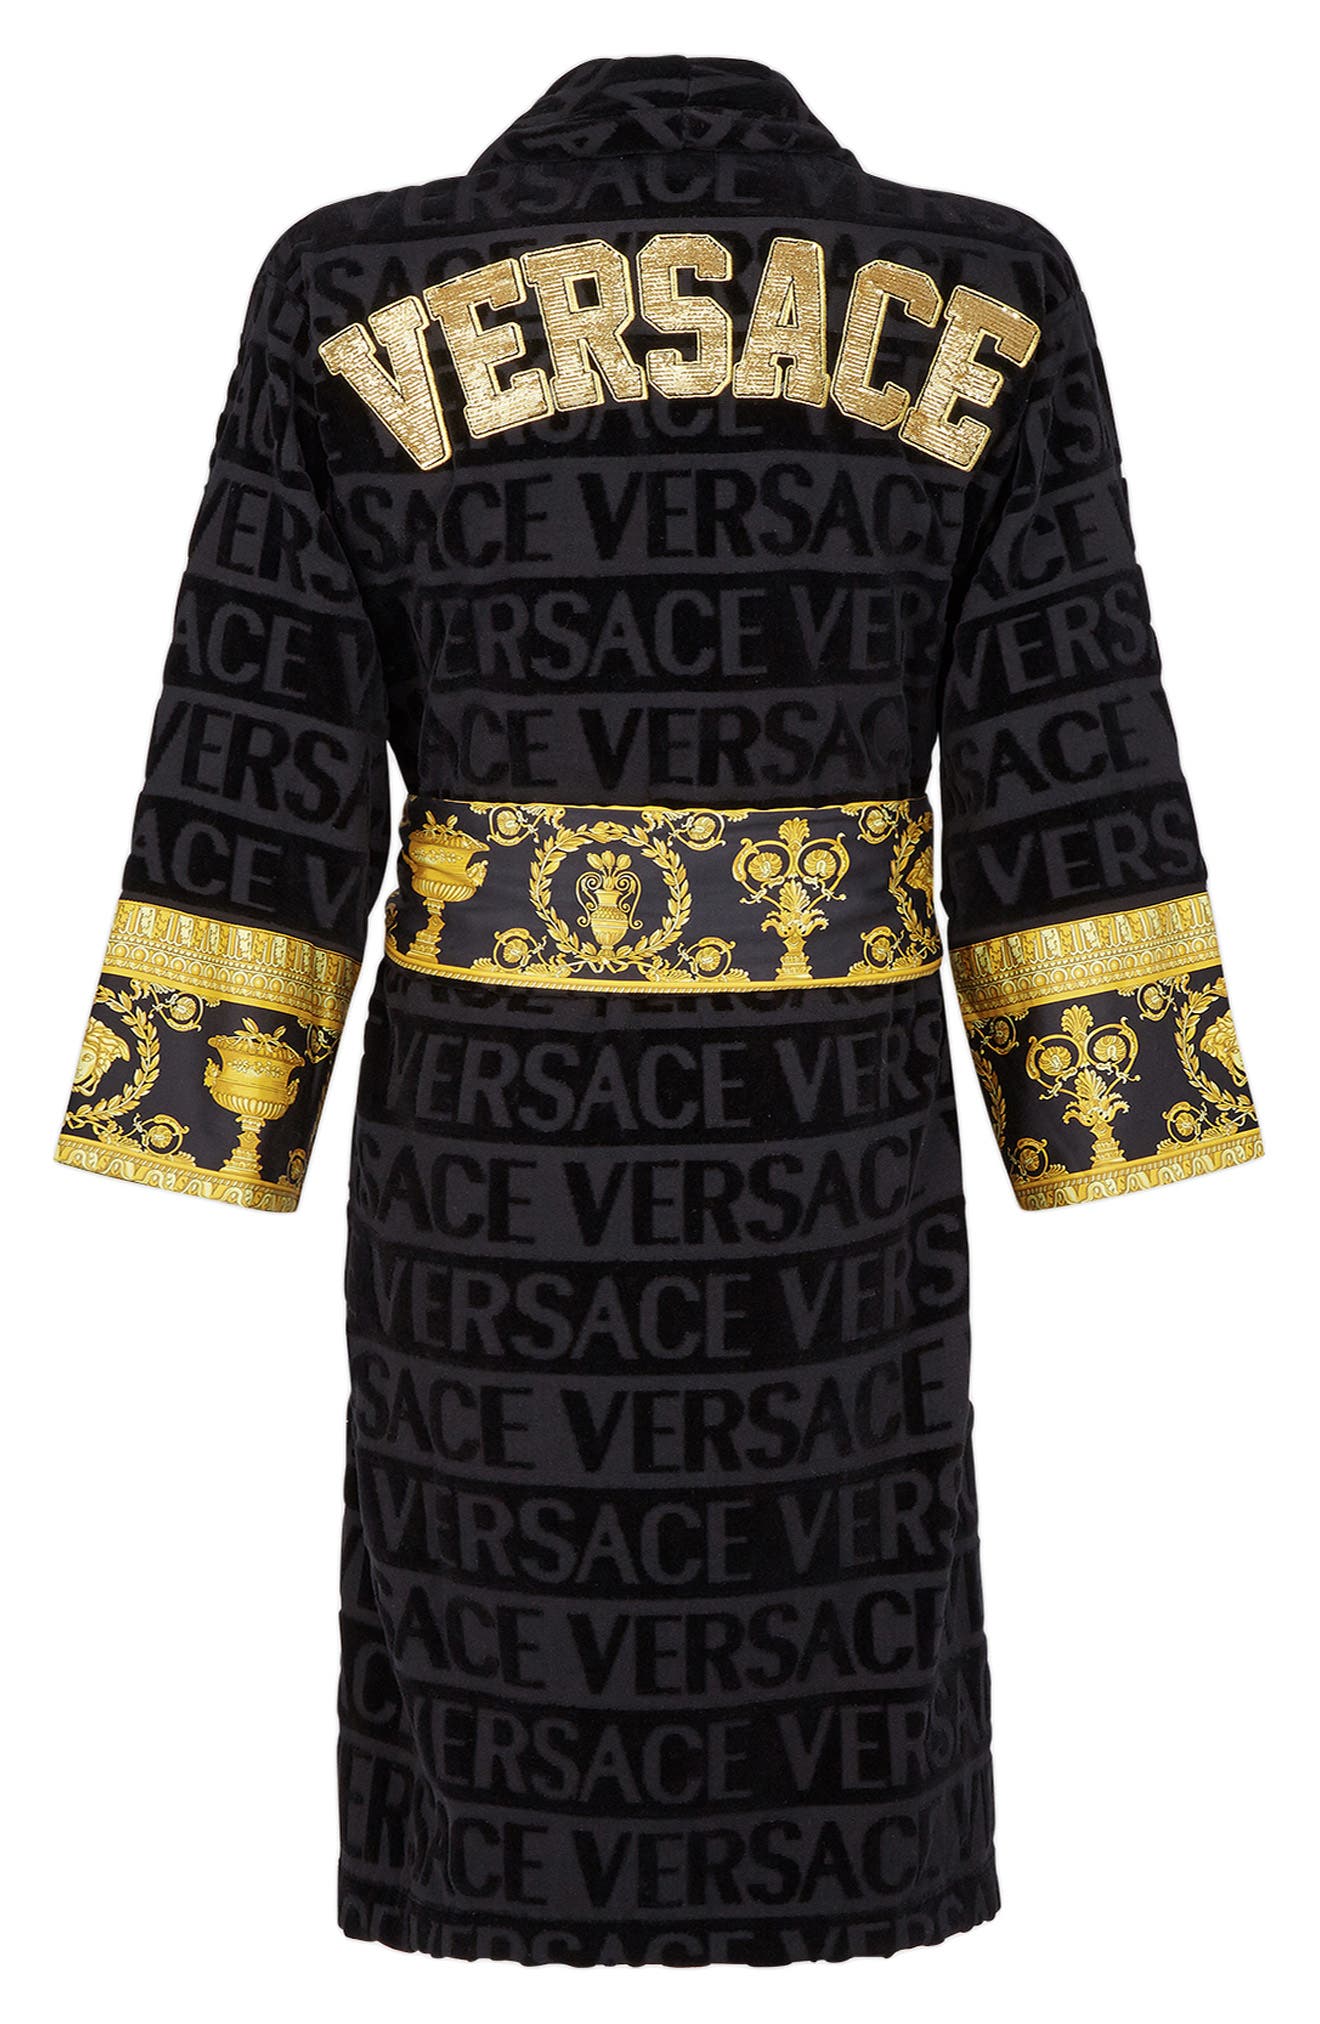 versace purple robe price,OFF 64%,www.concordehotels.com.tr